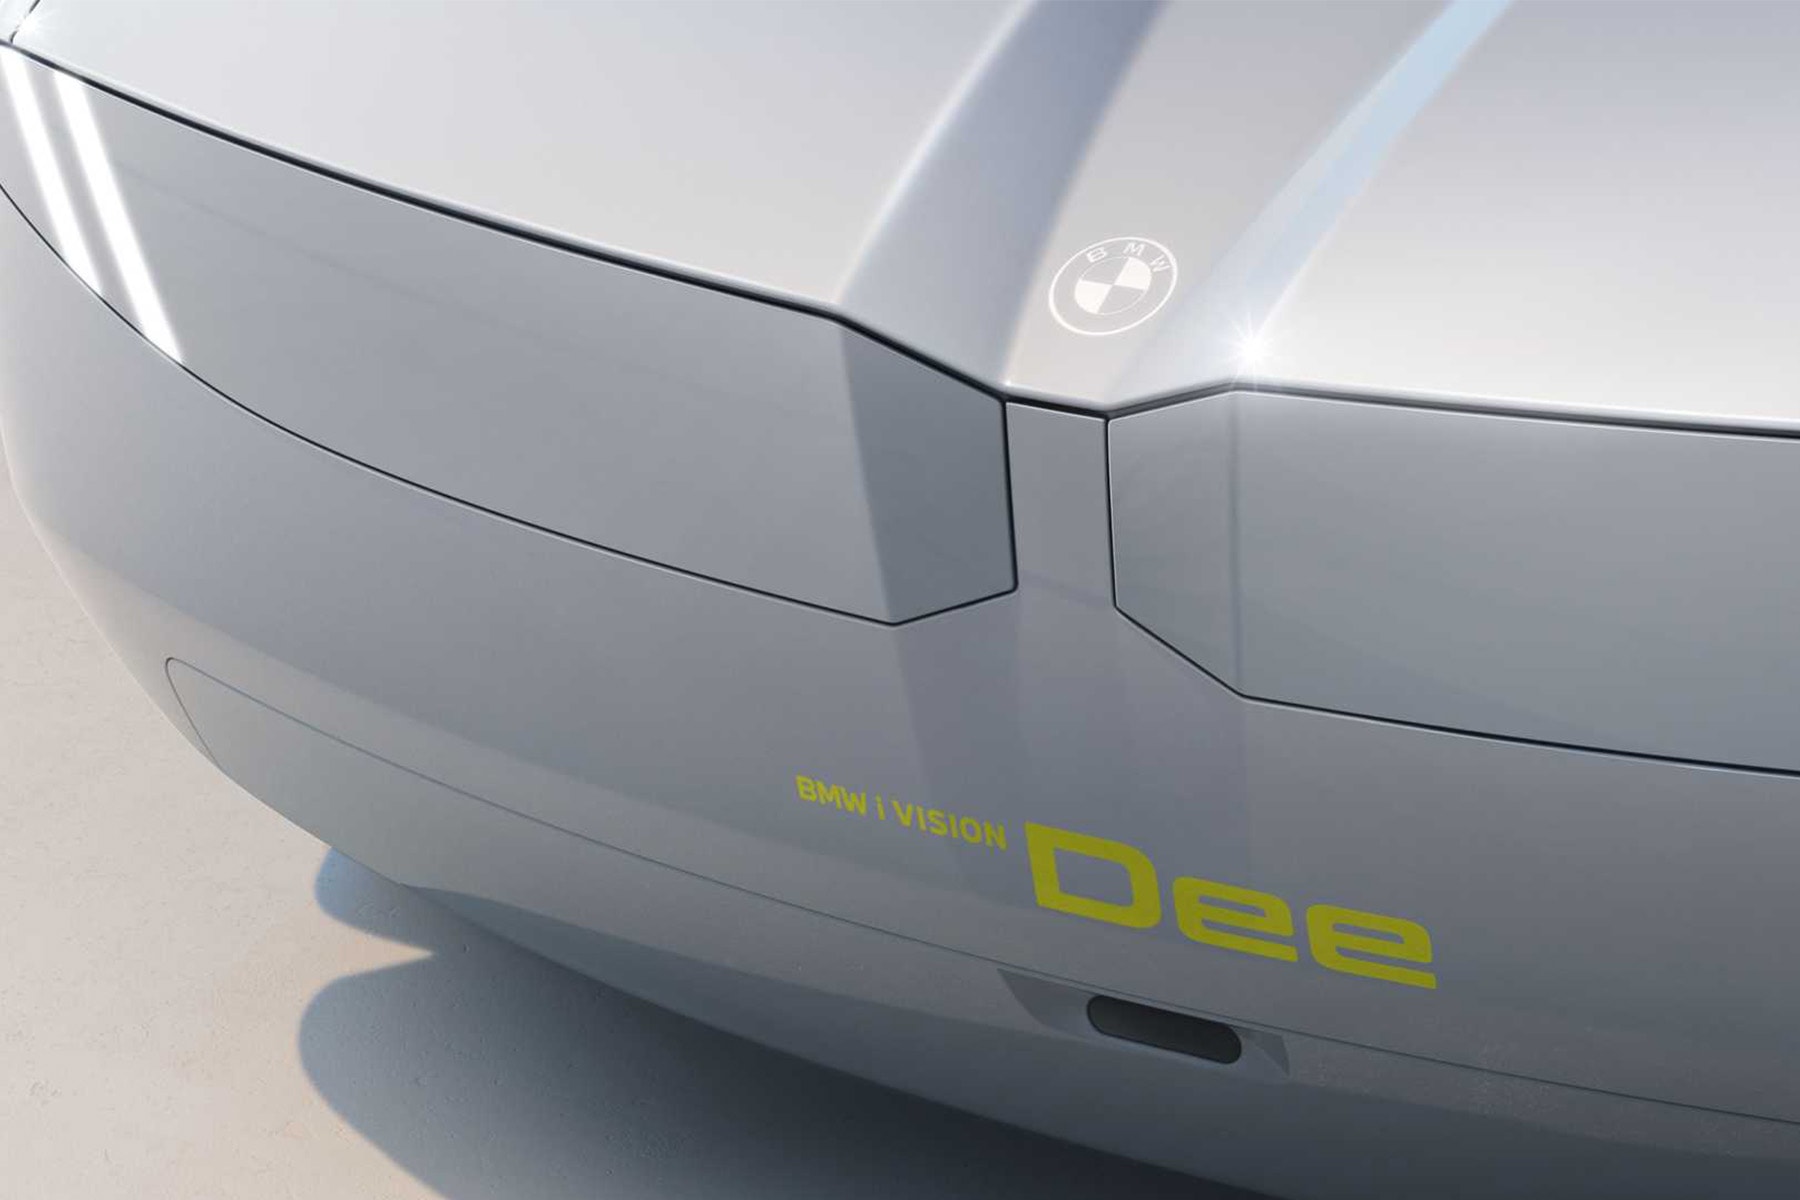 BMW 全新概念電能車 i Vision Dee 正式亮相